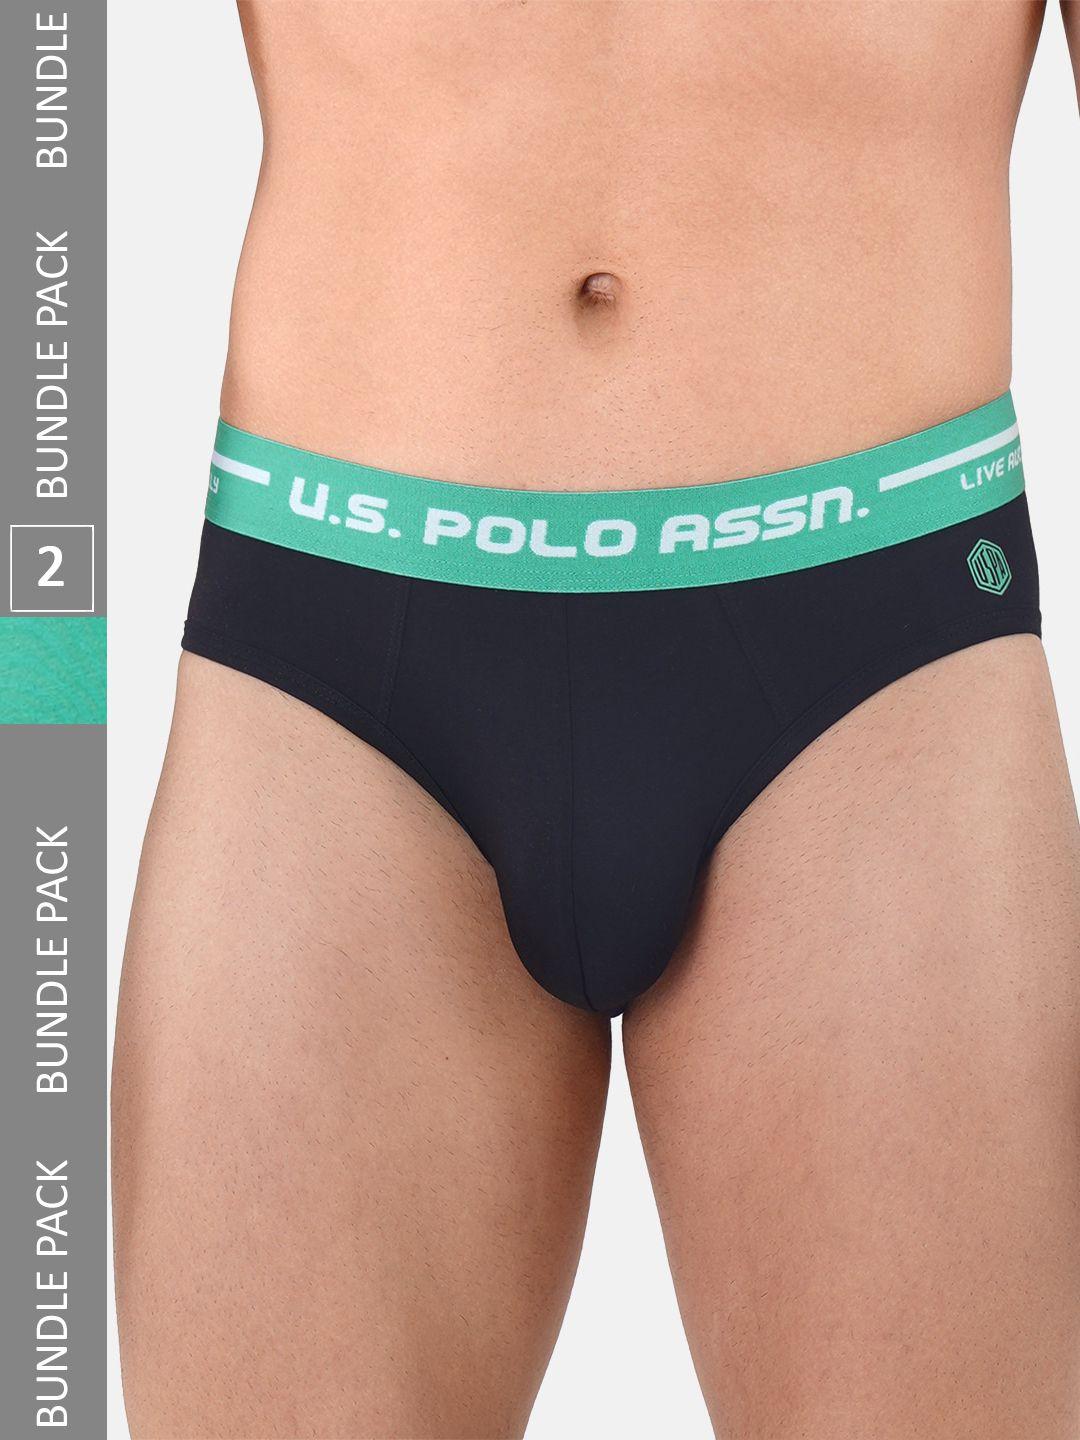 u.s. polo assn. men pack of 2 brand logo printed basic briefs